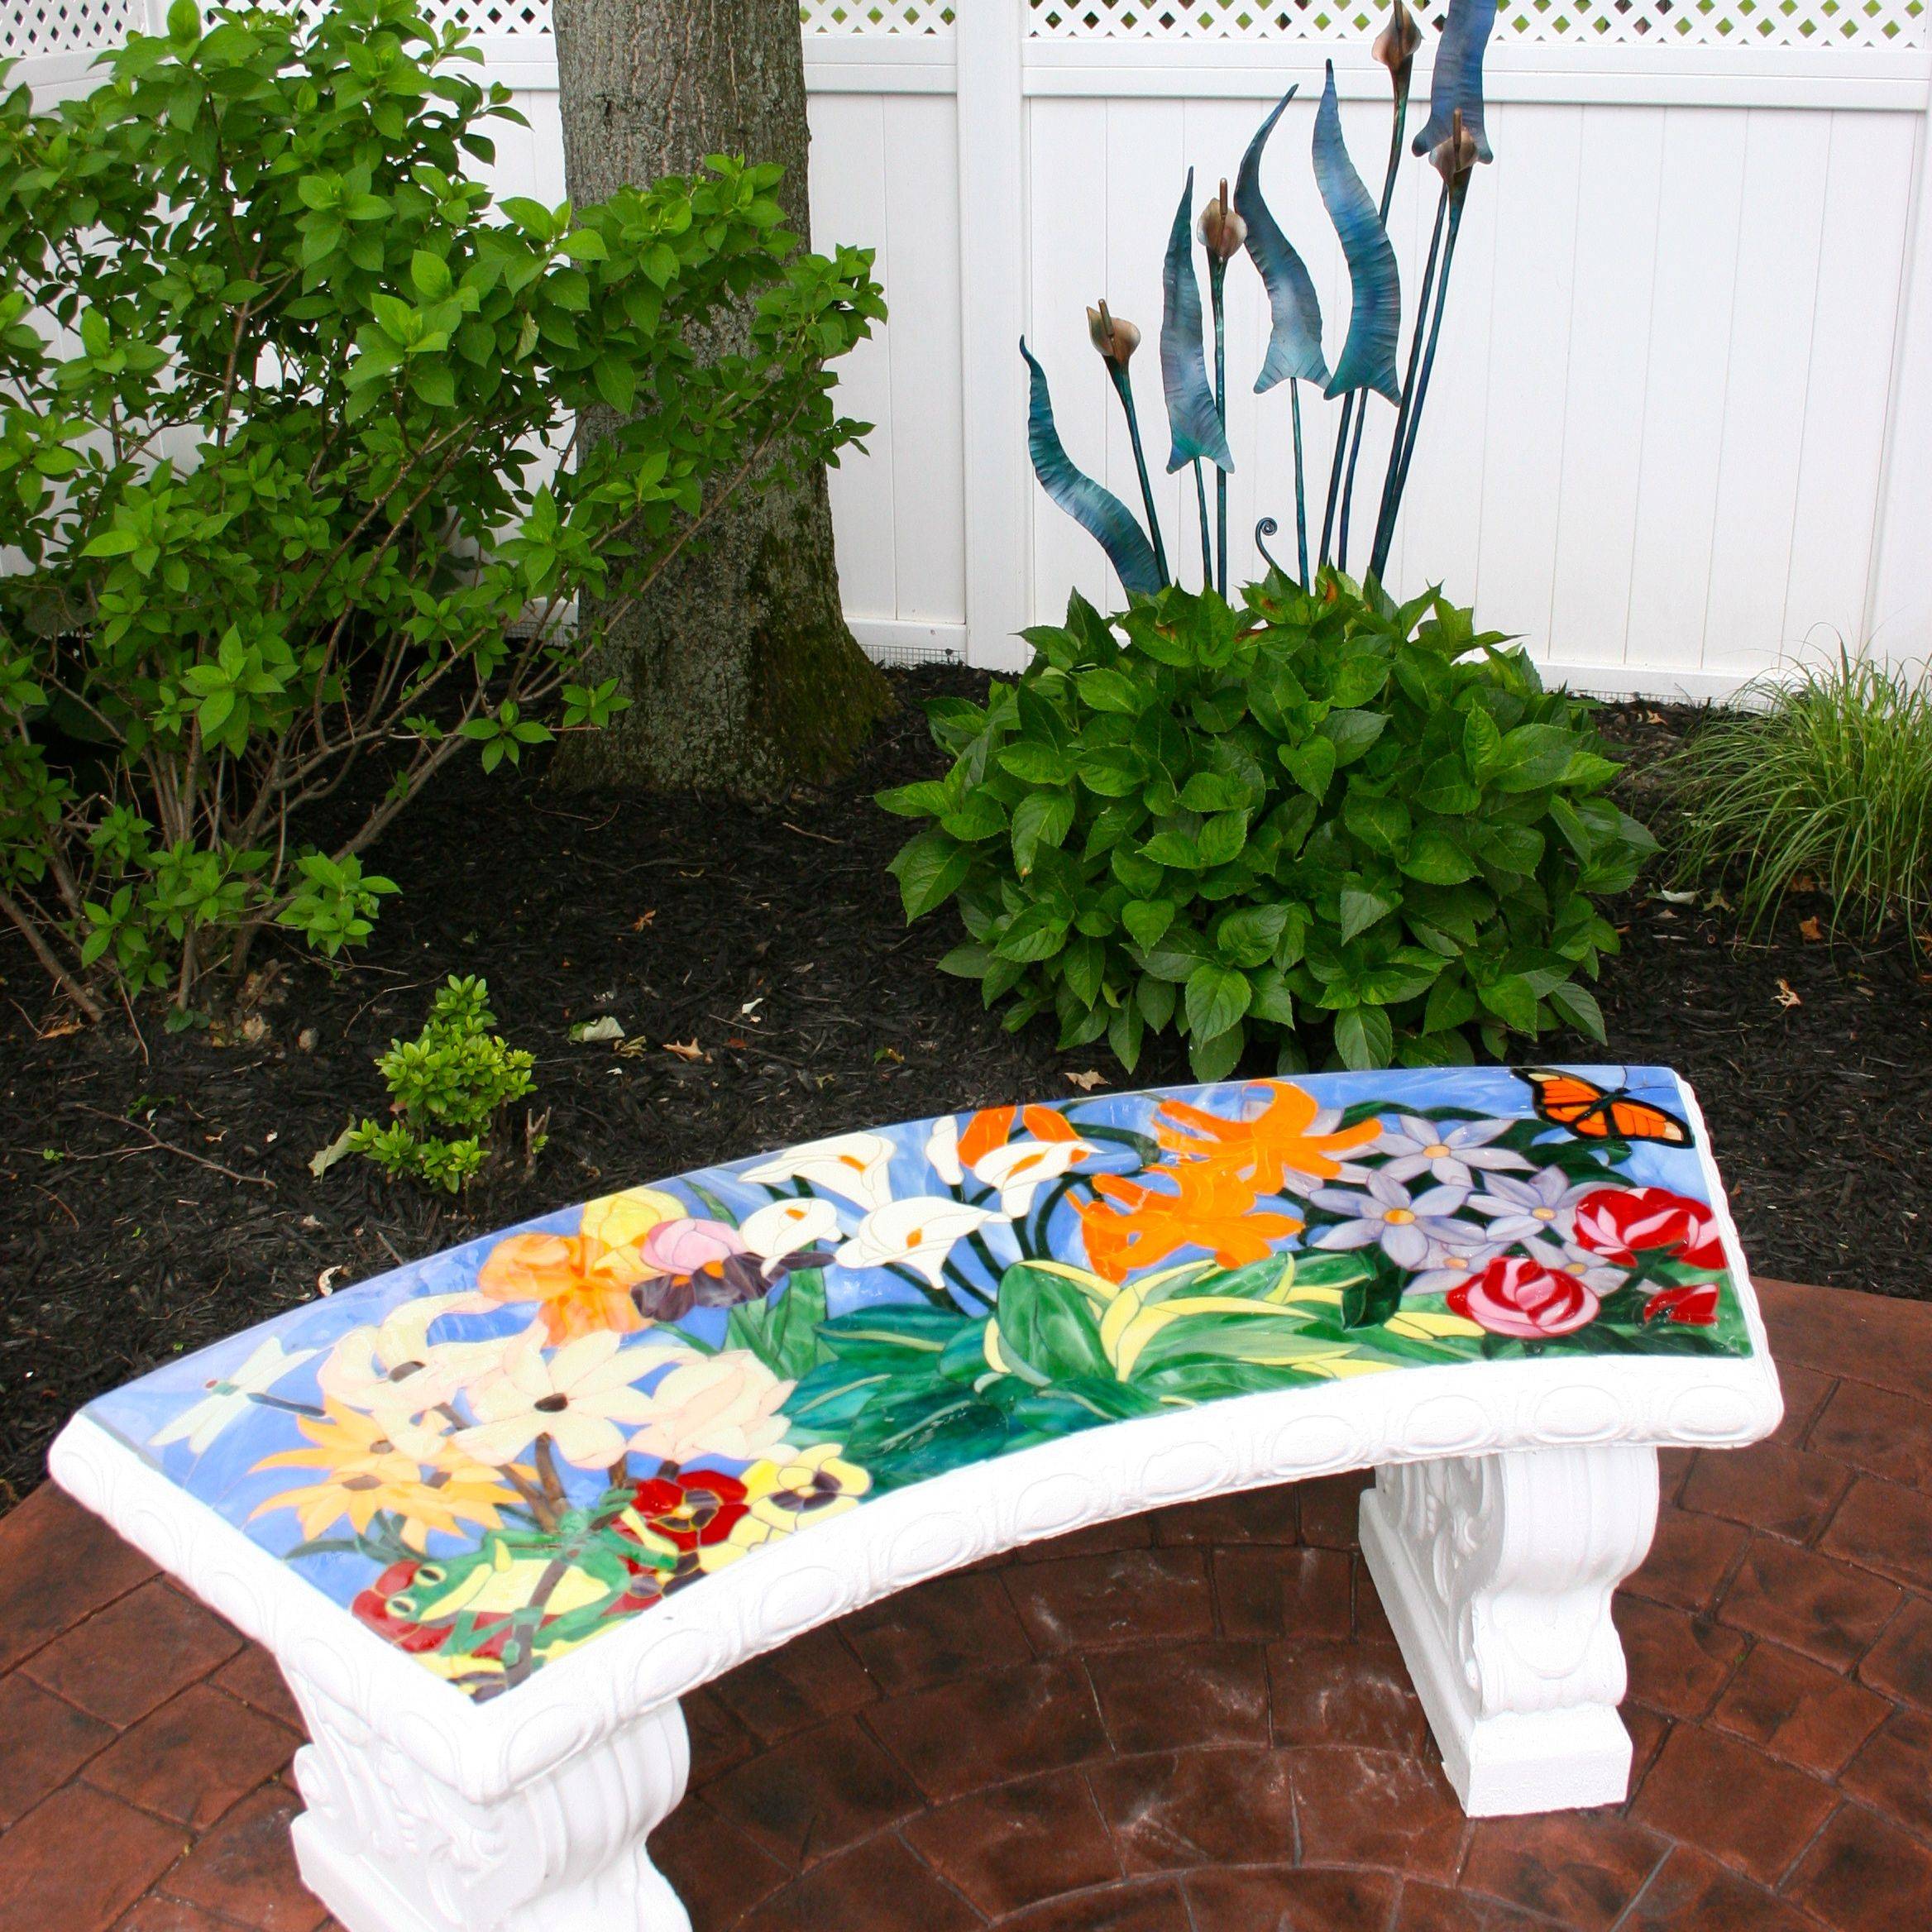 Inspiring Mosaic Garden Bench Image Ideas